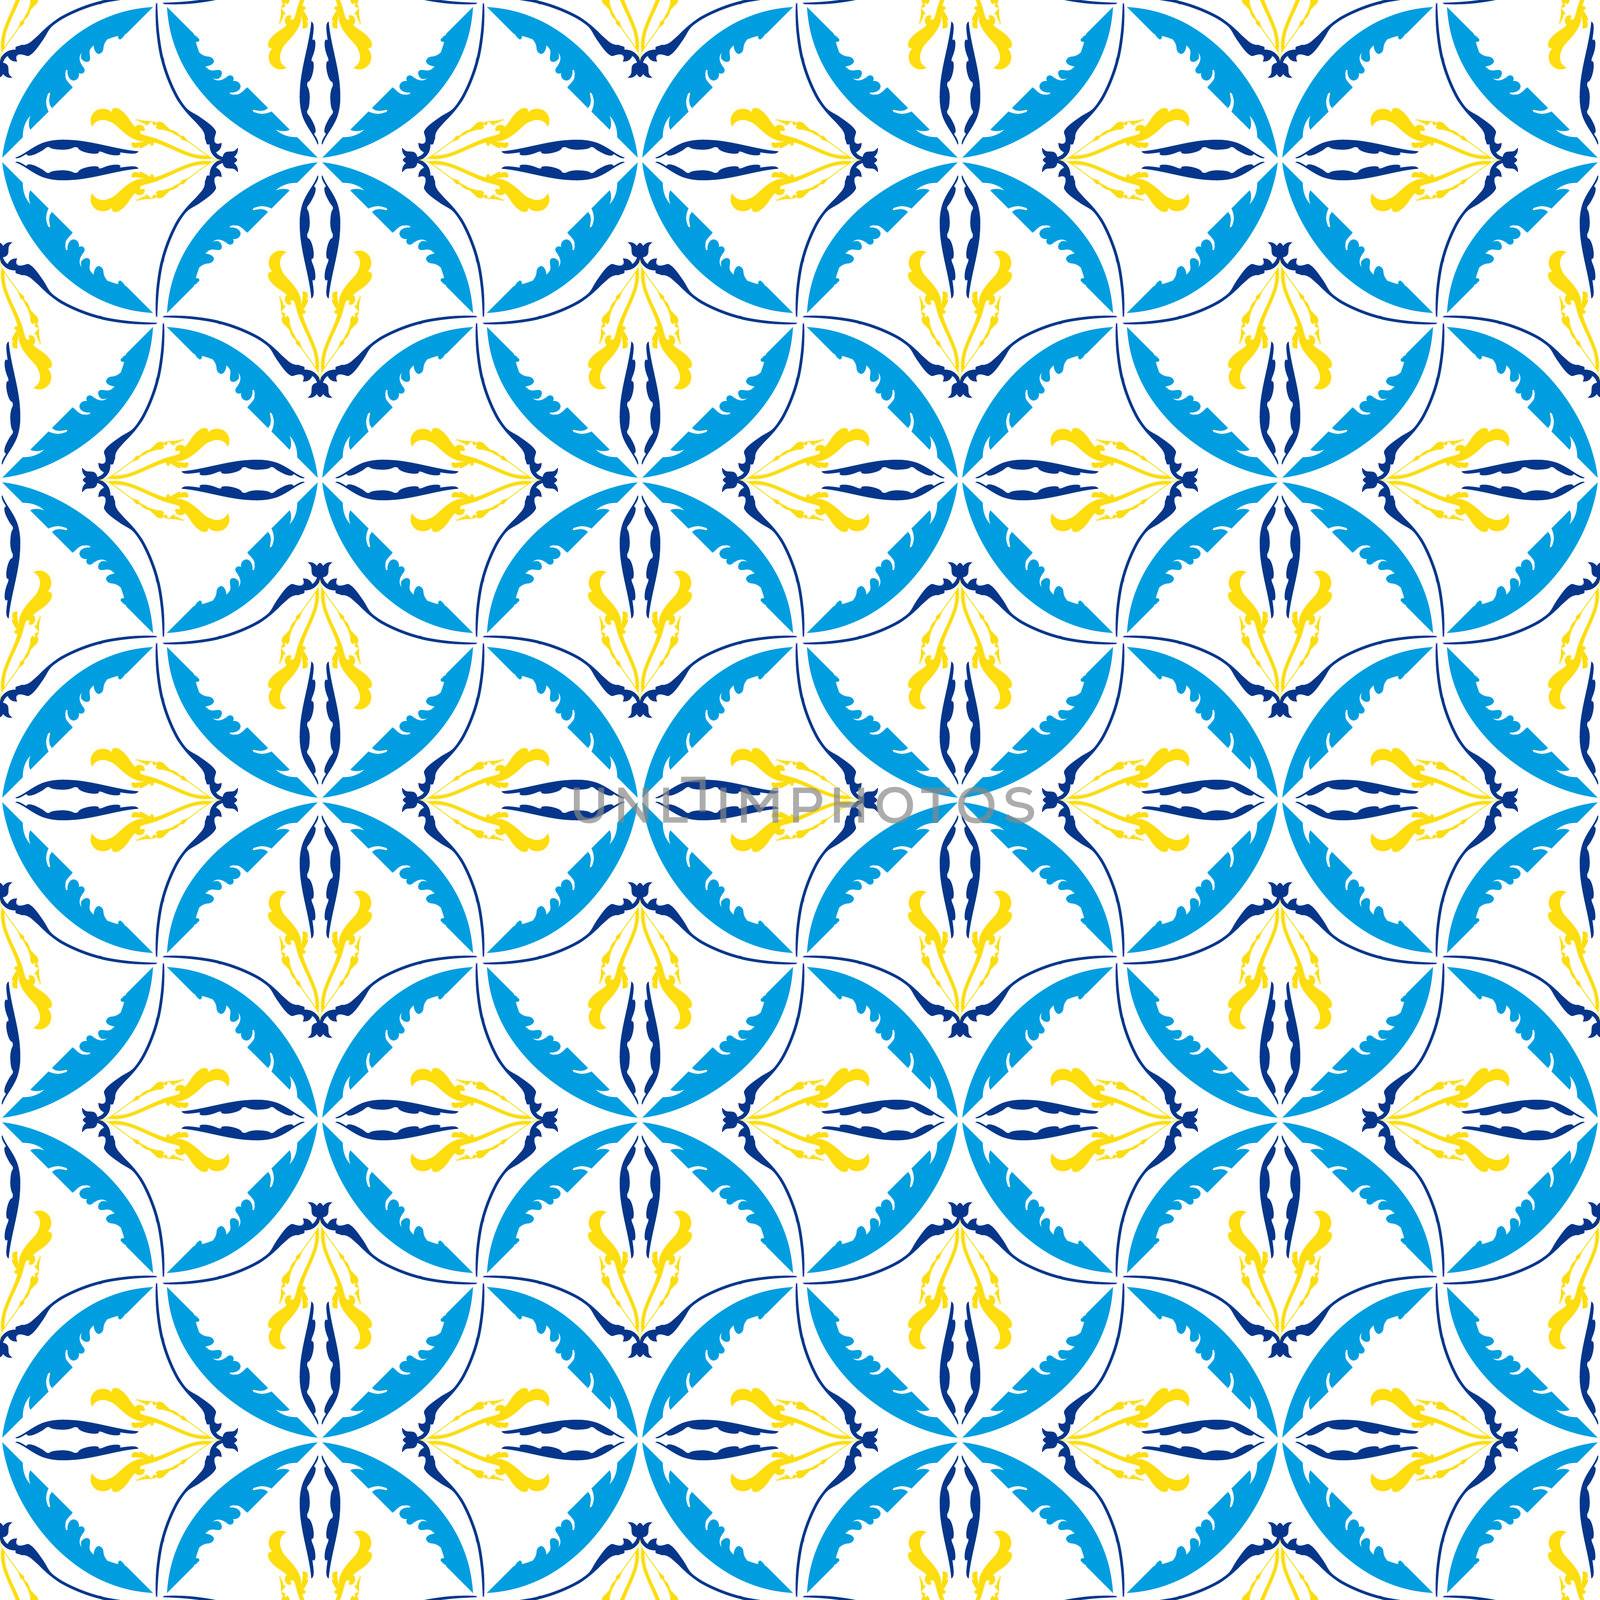 Mosaic seamless pattern by homydesign